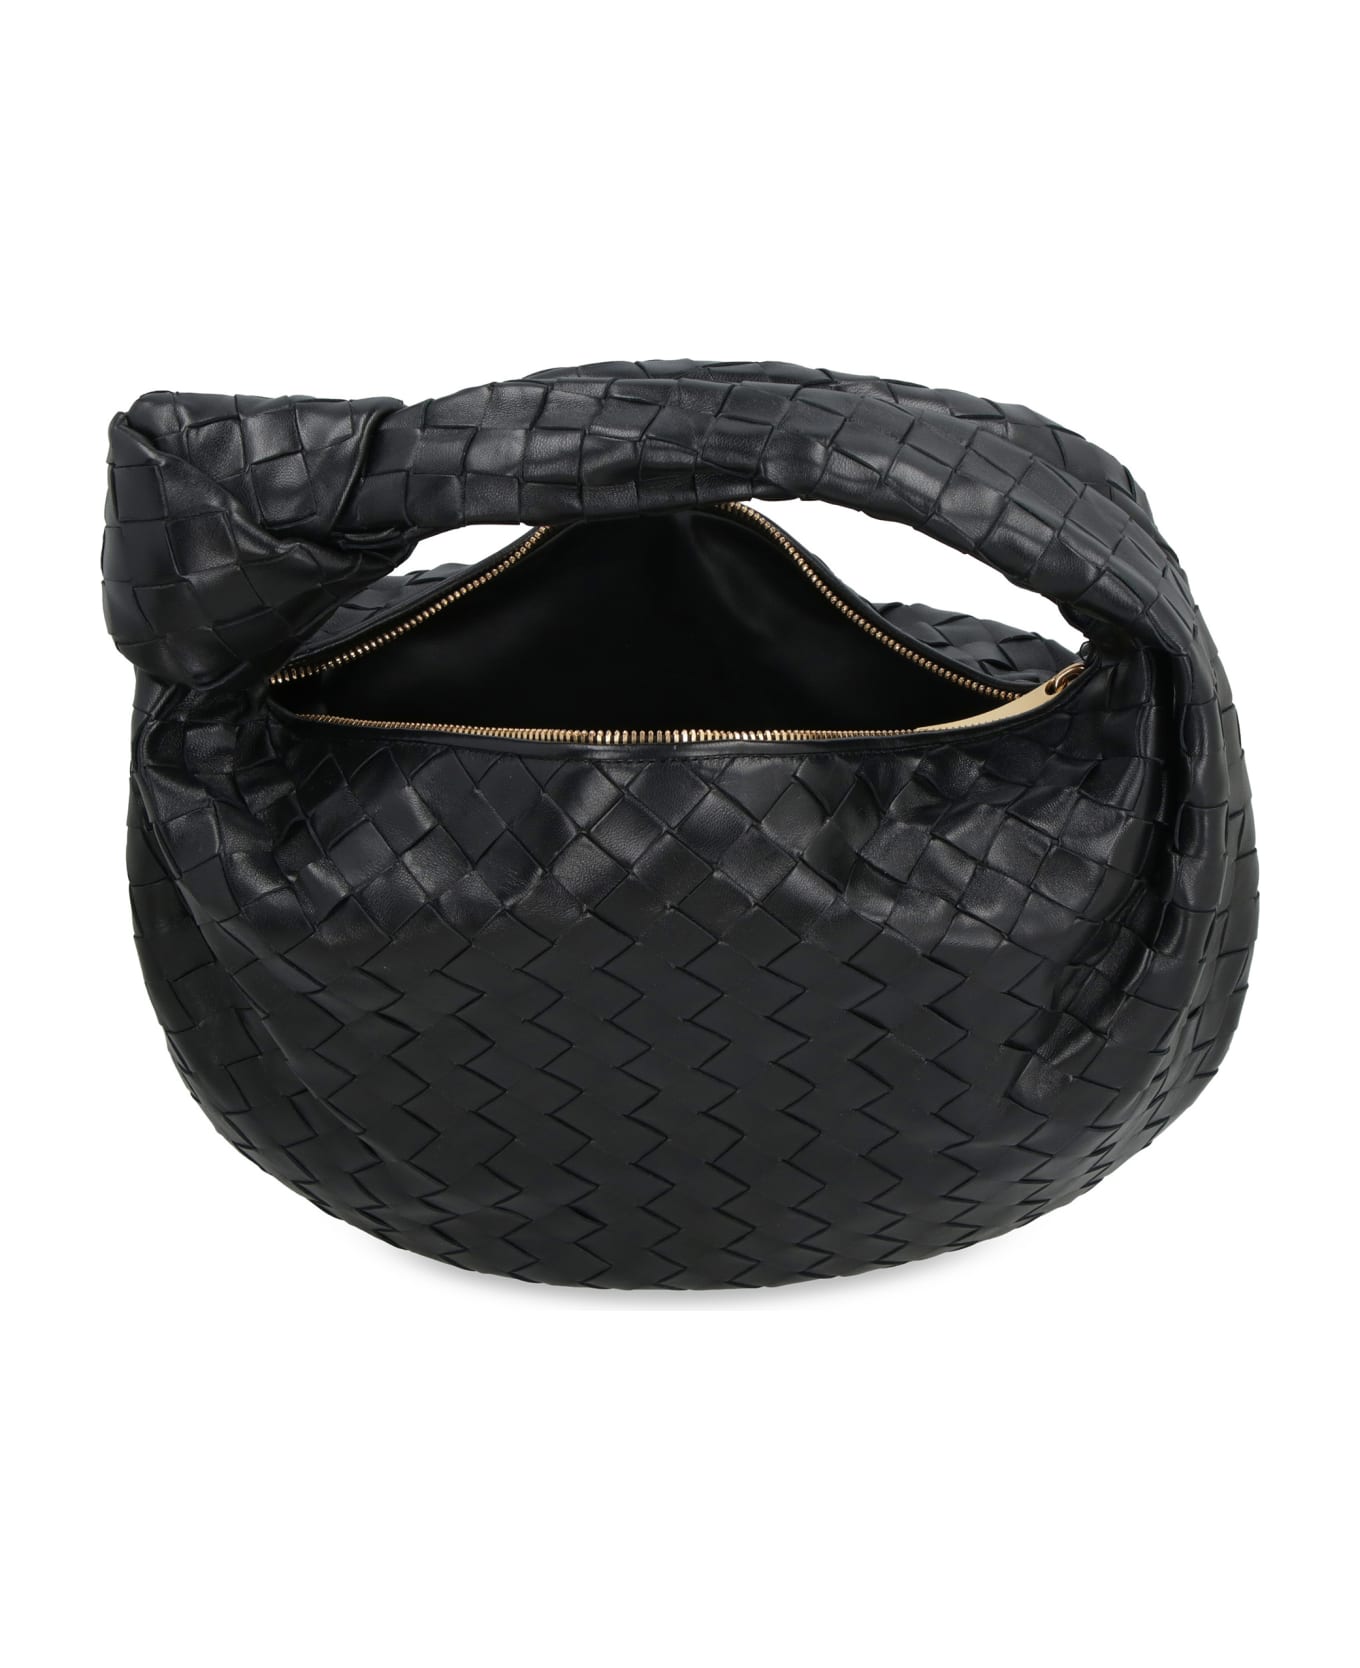 Bottega Veneta Jodie Leather Shoulder Bag - black